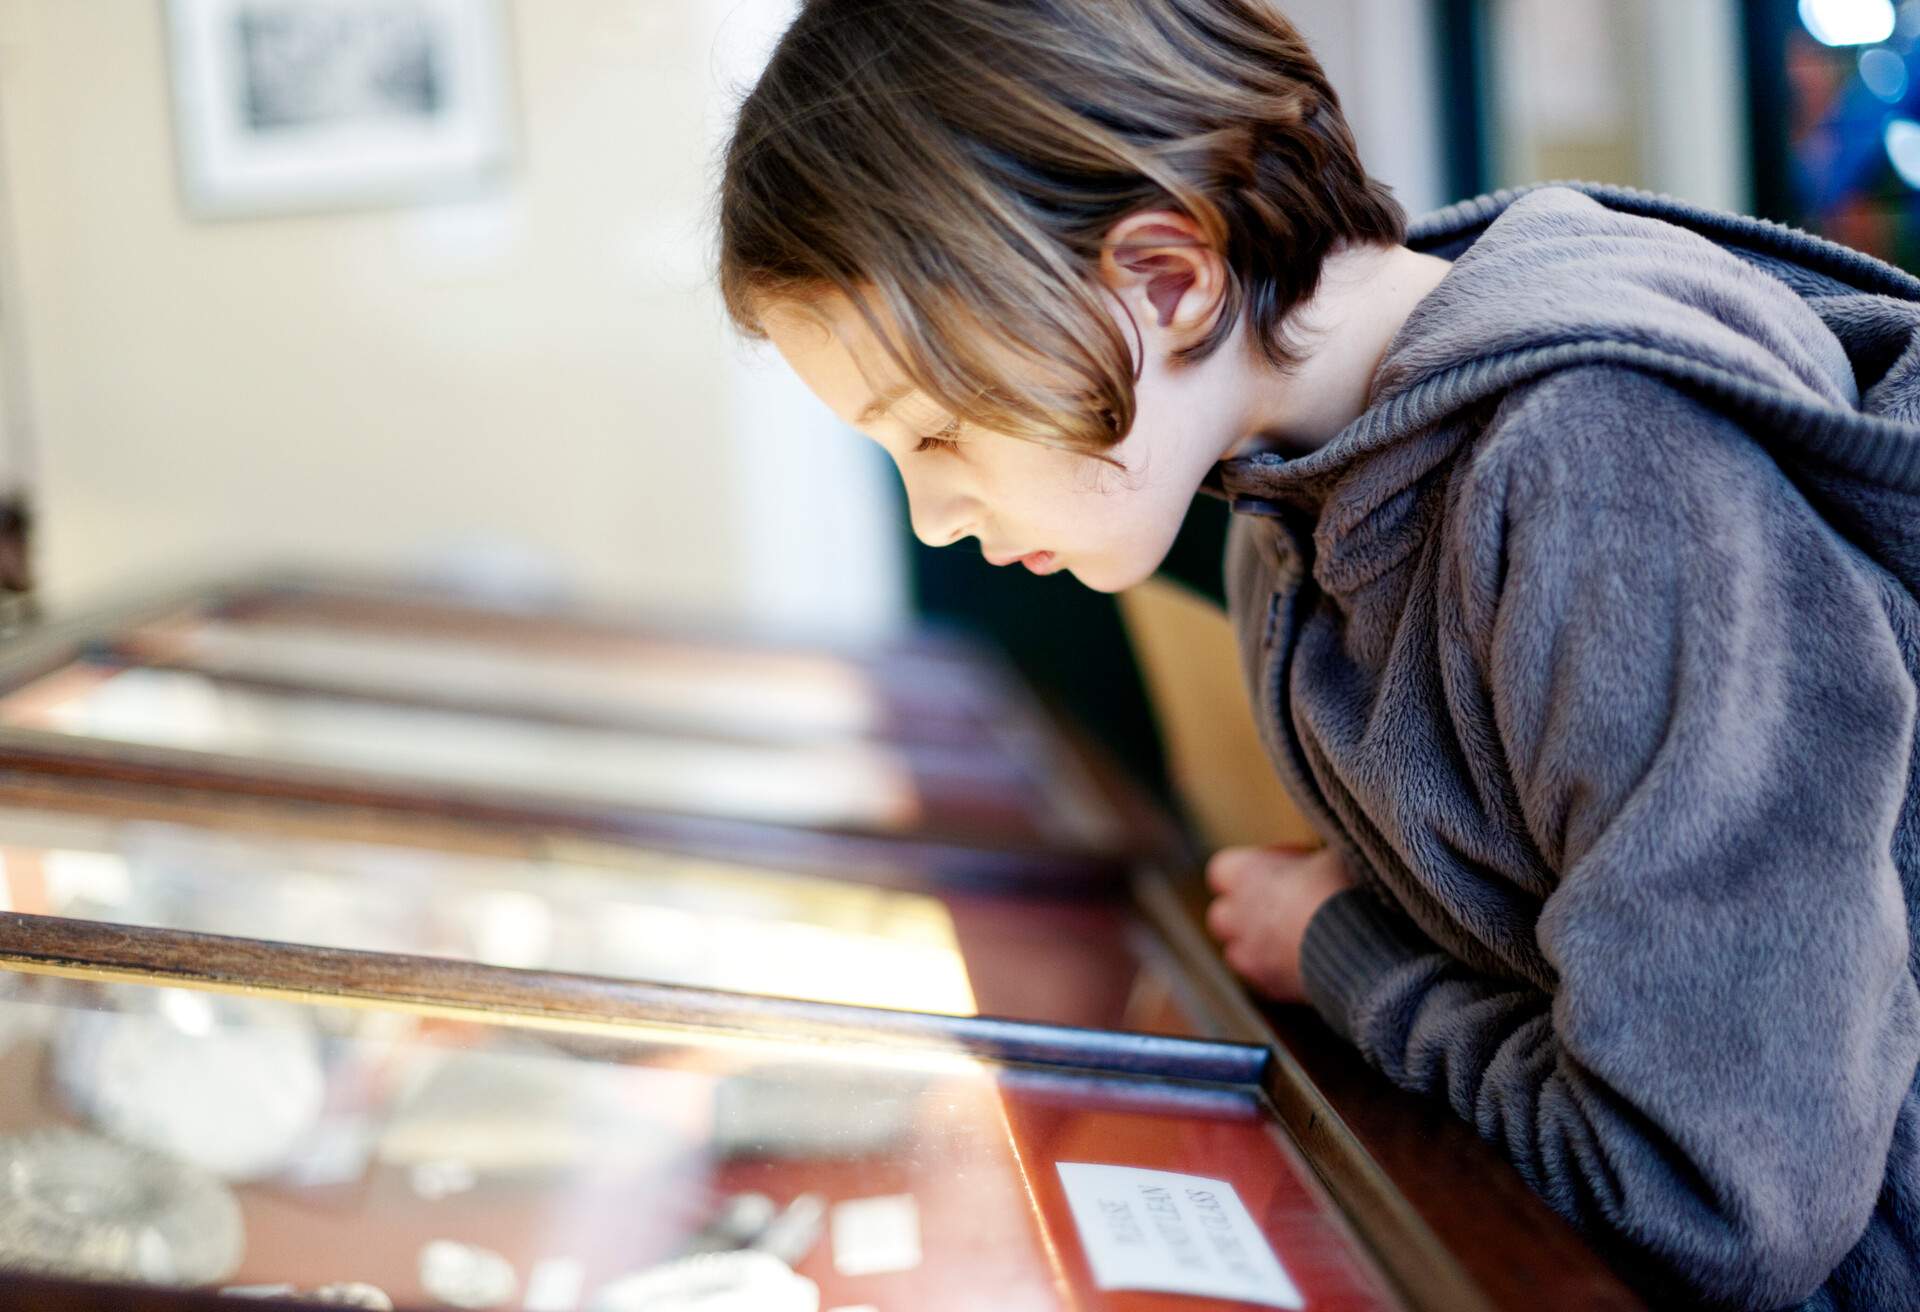 Brunette kid in a grey hoodie looks down on a glass-encased exhibit.